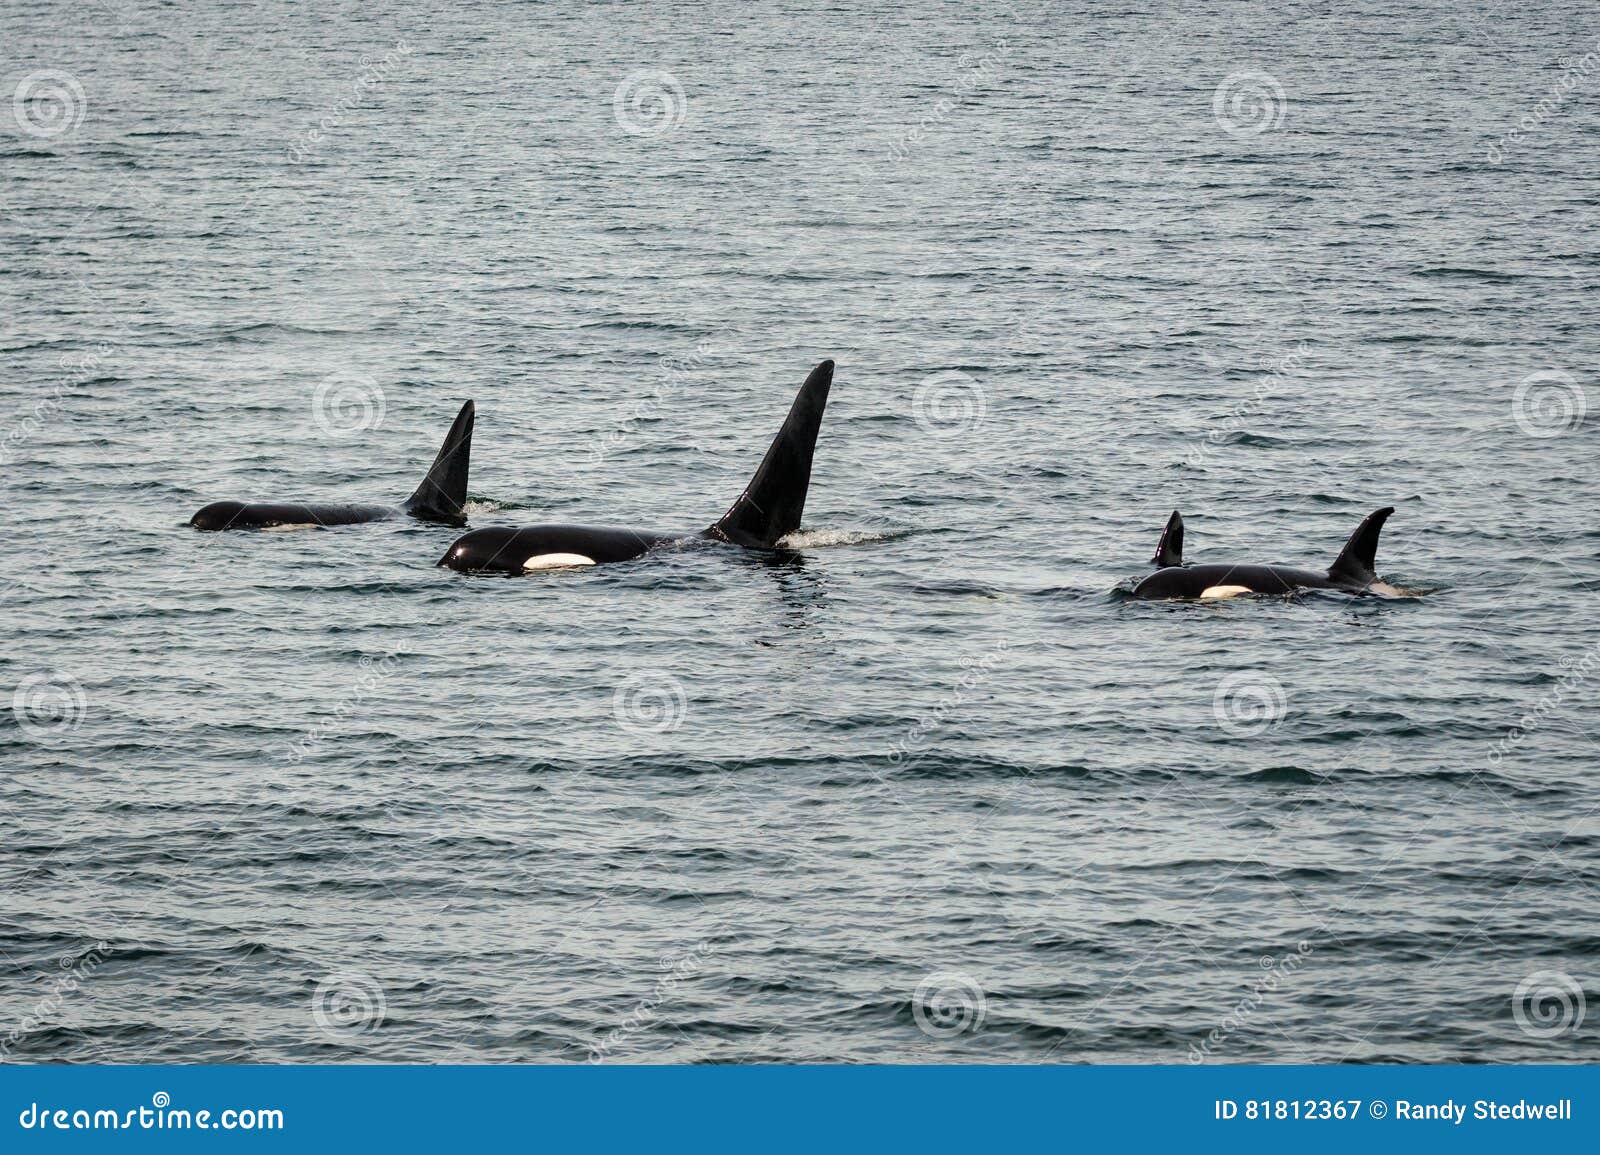 orcas in alaska